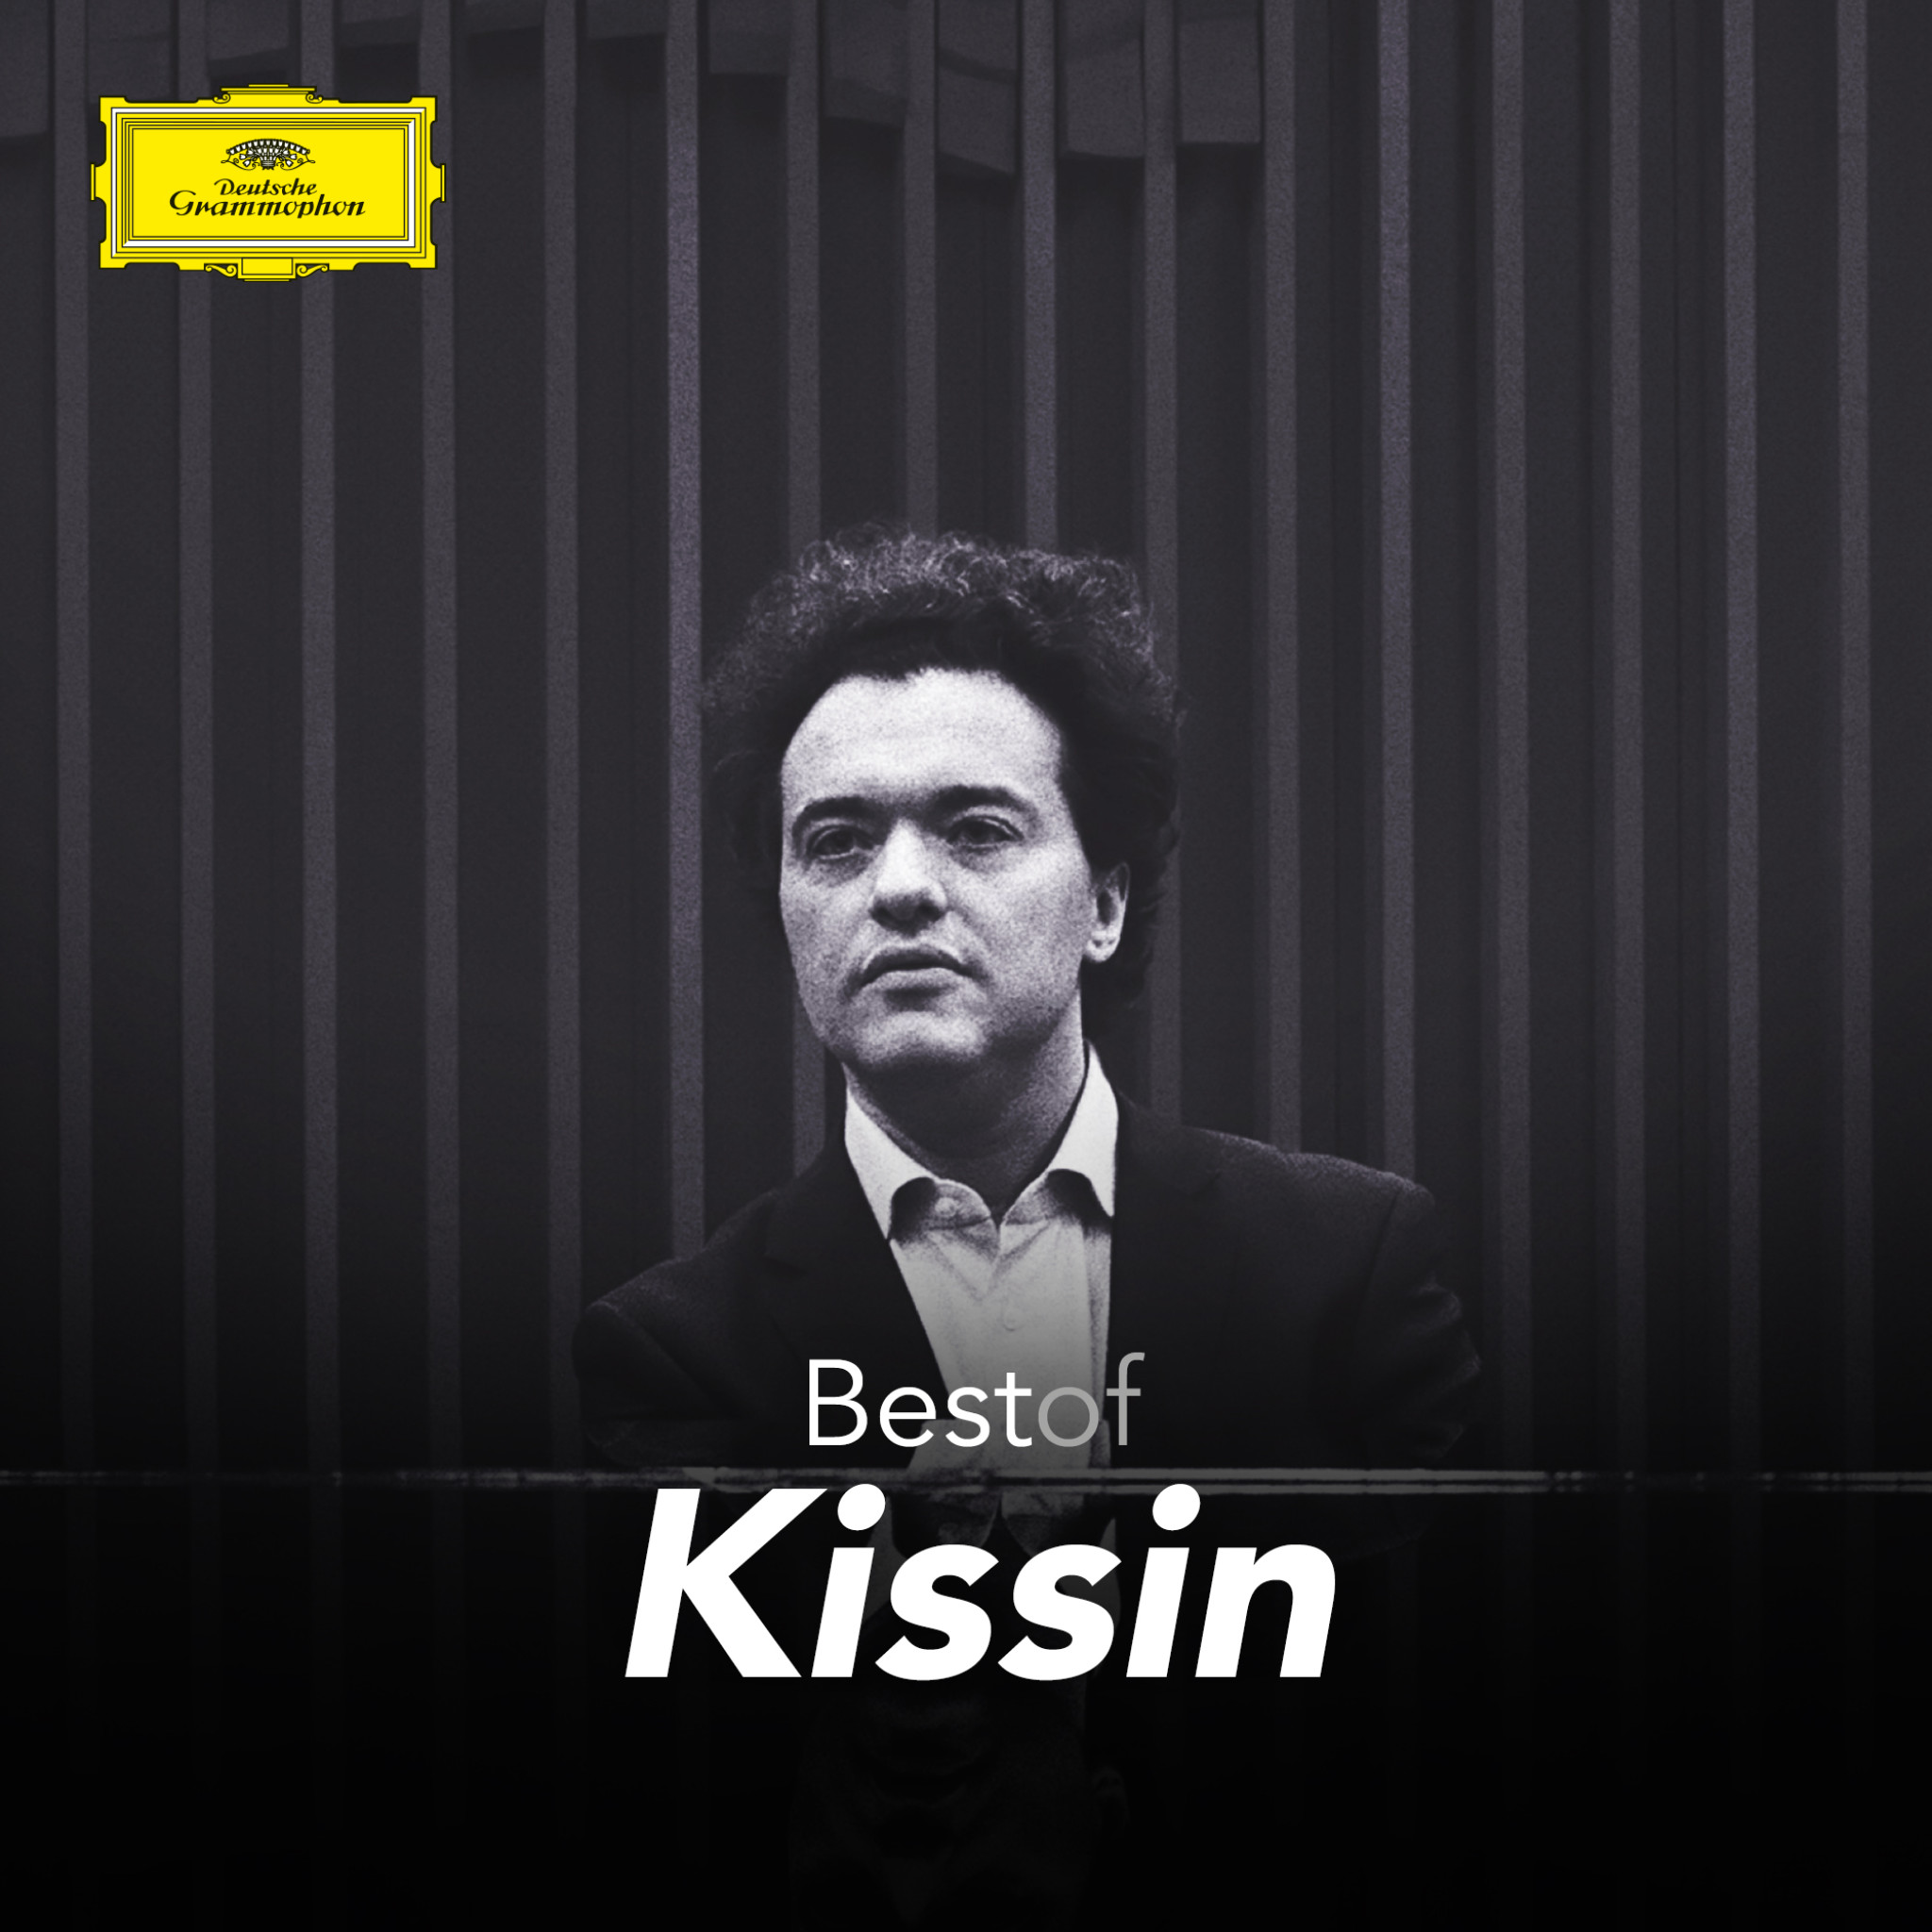 Evgeny Kissin - Best of DG Playlist